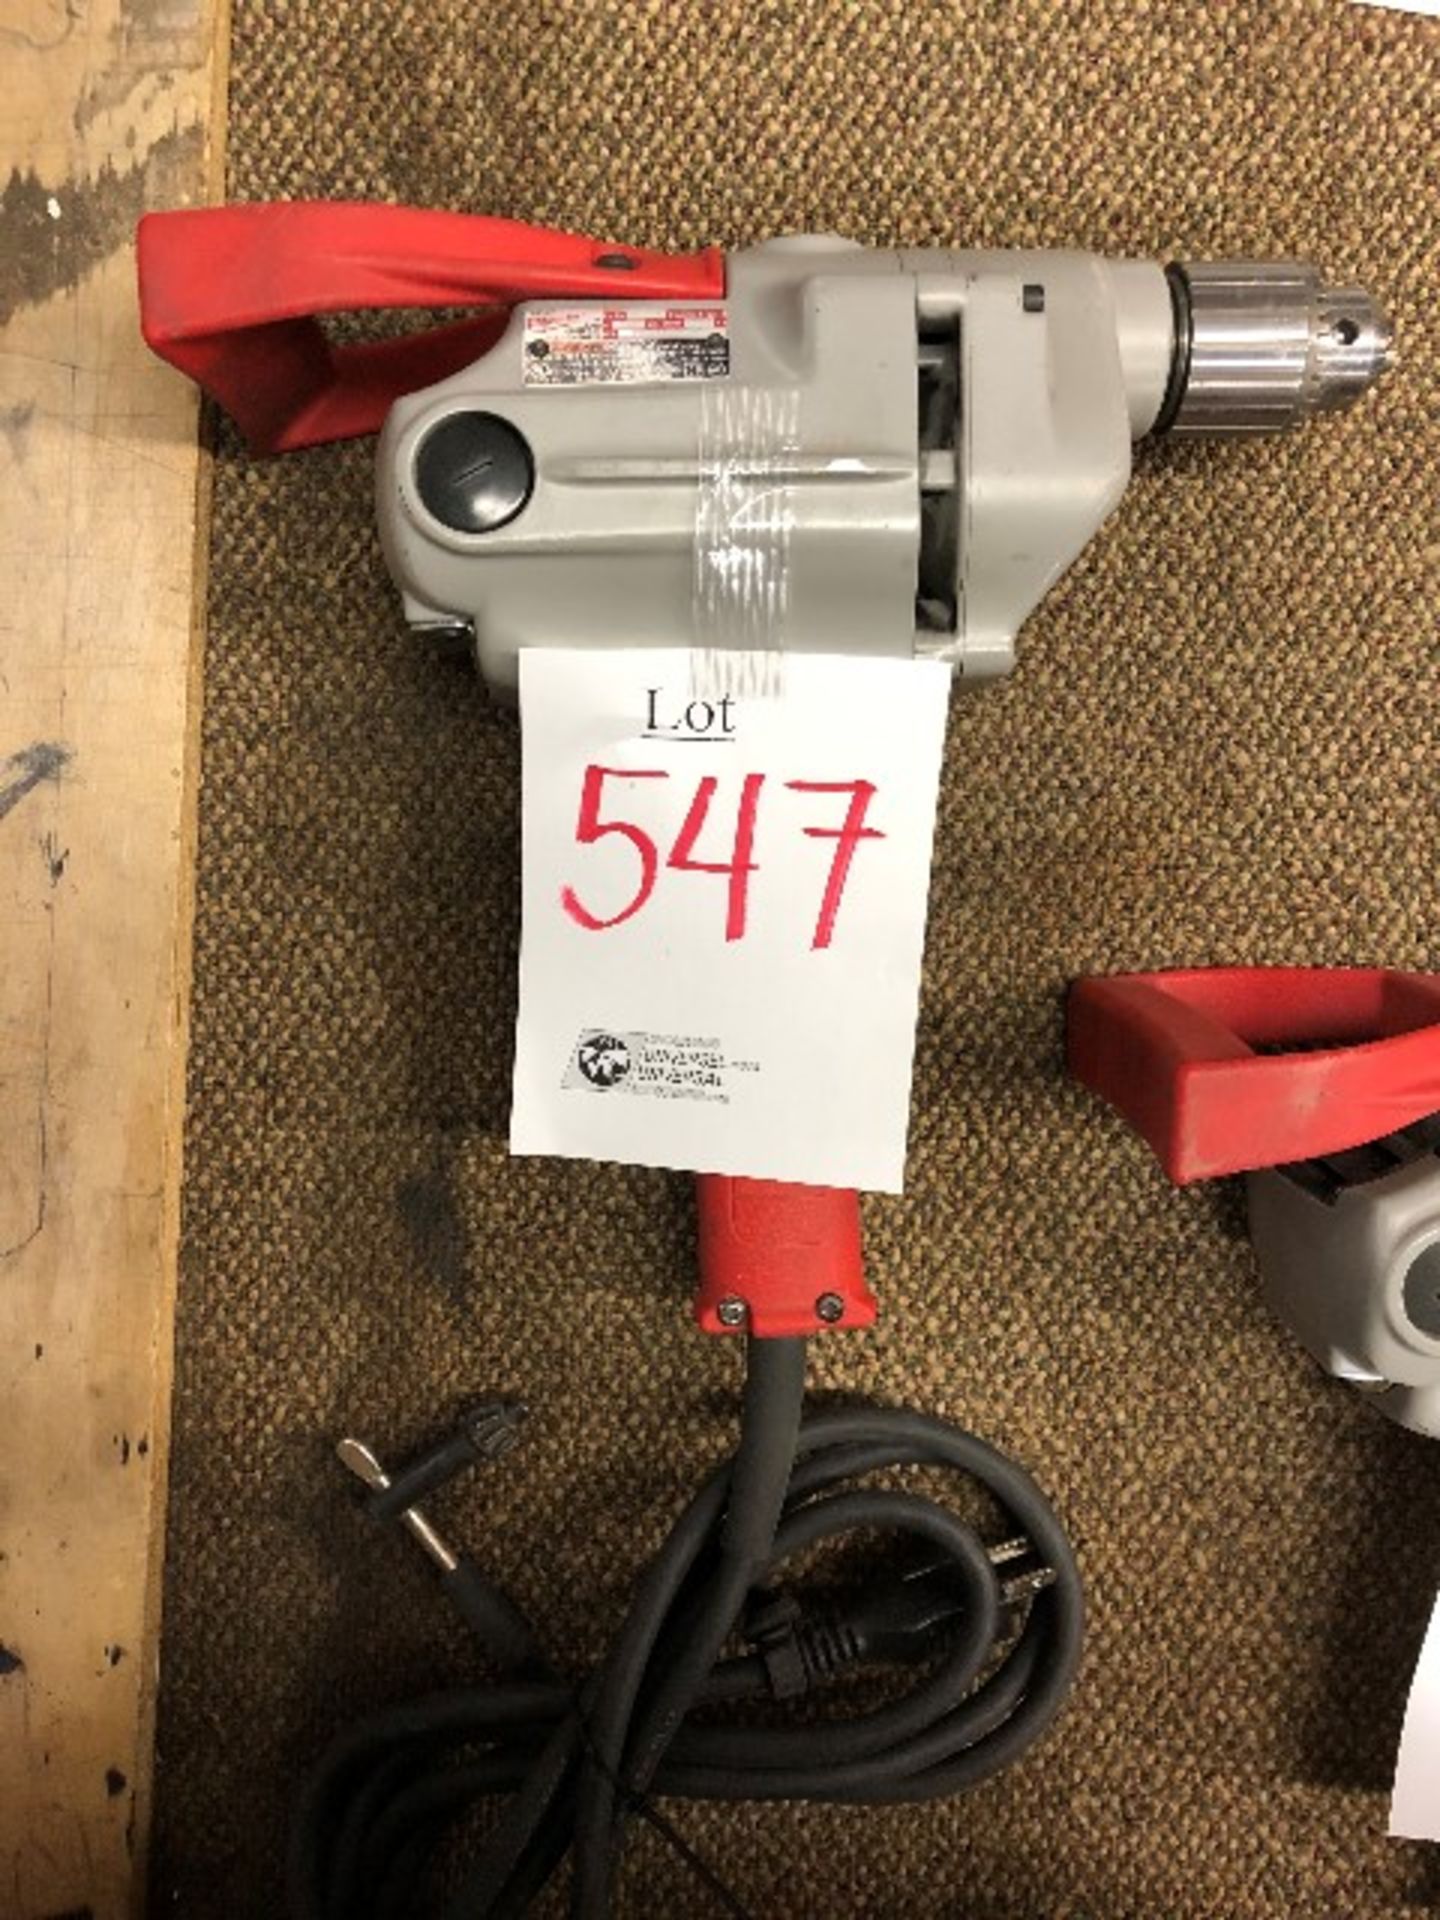 Milwaukee 1660 1/2” Compact drill